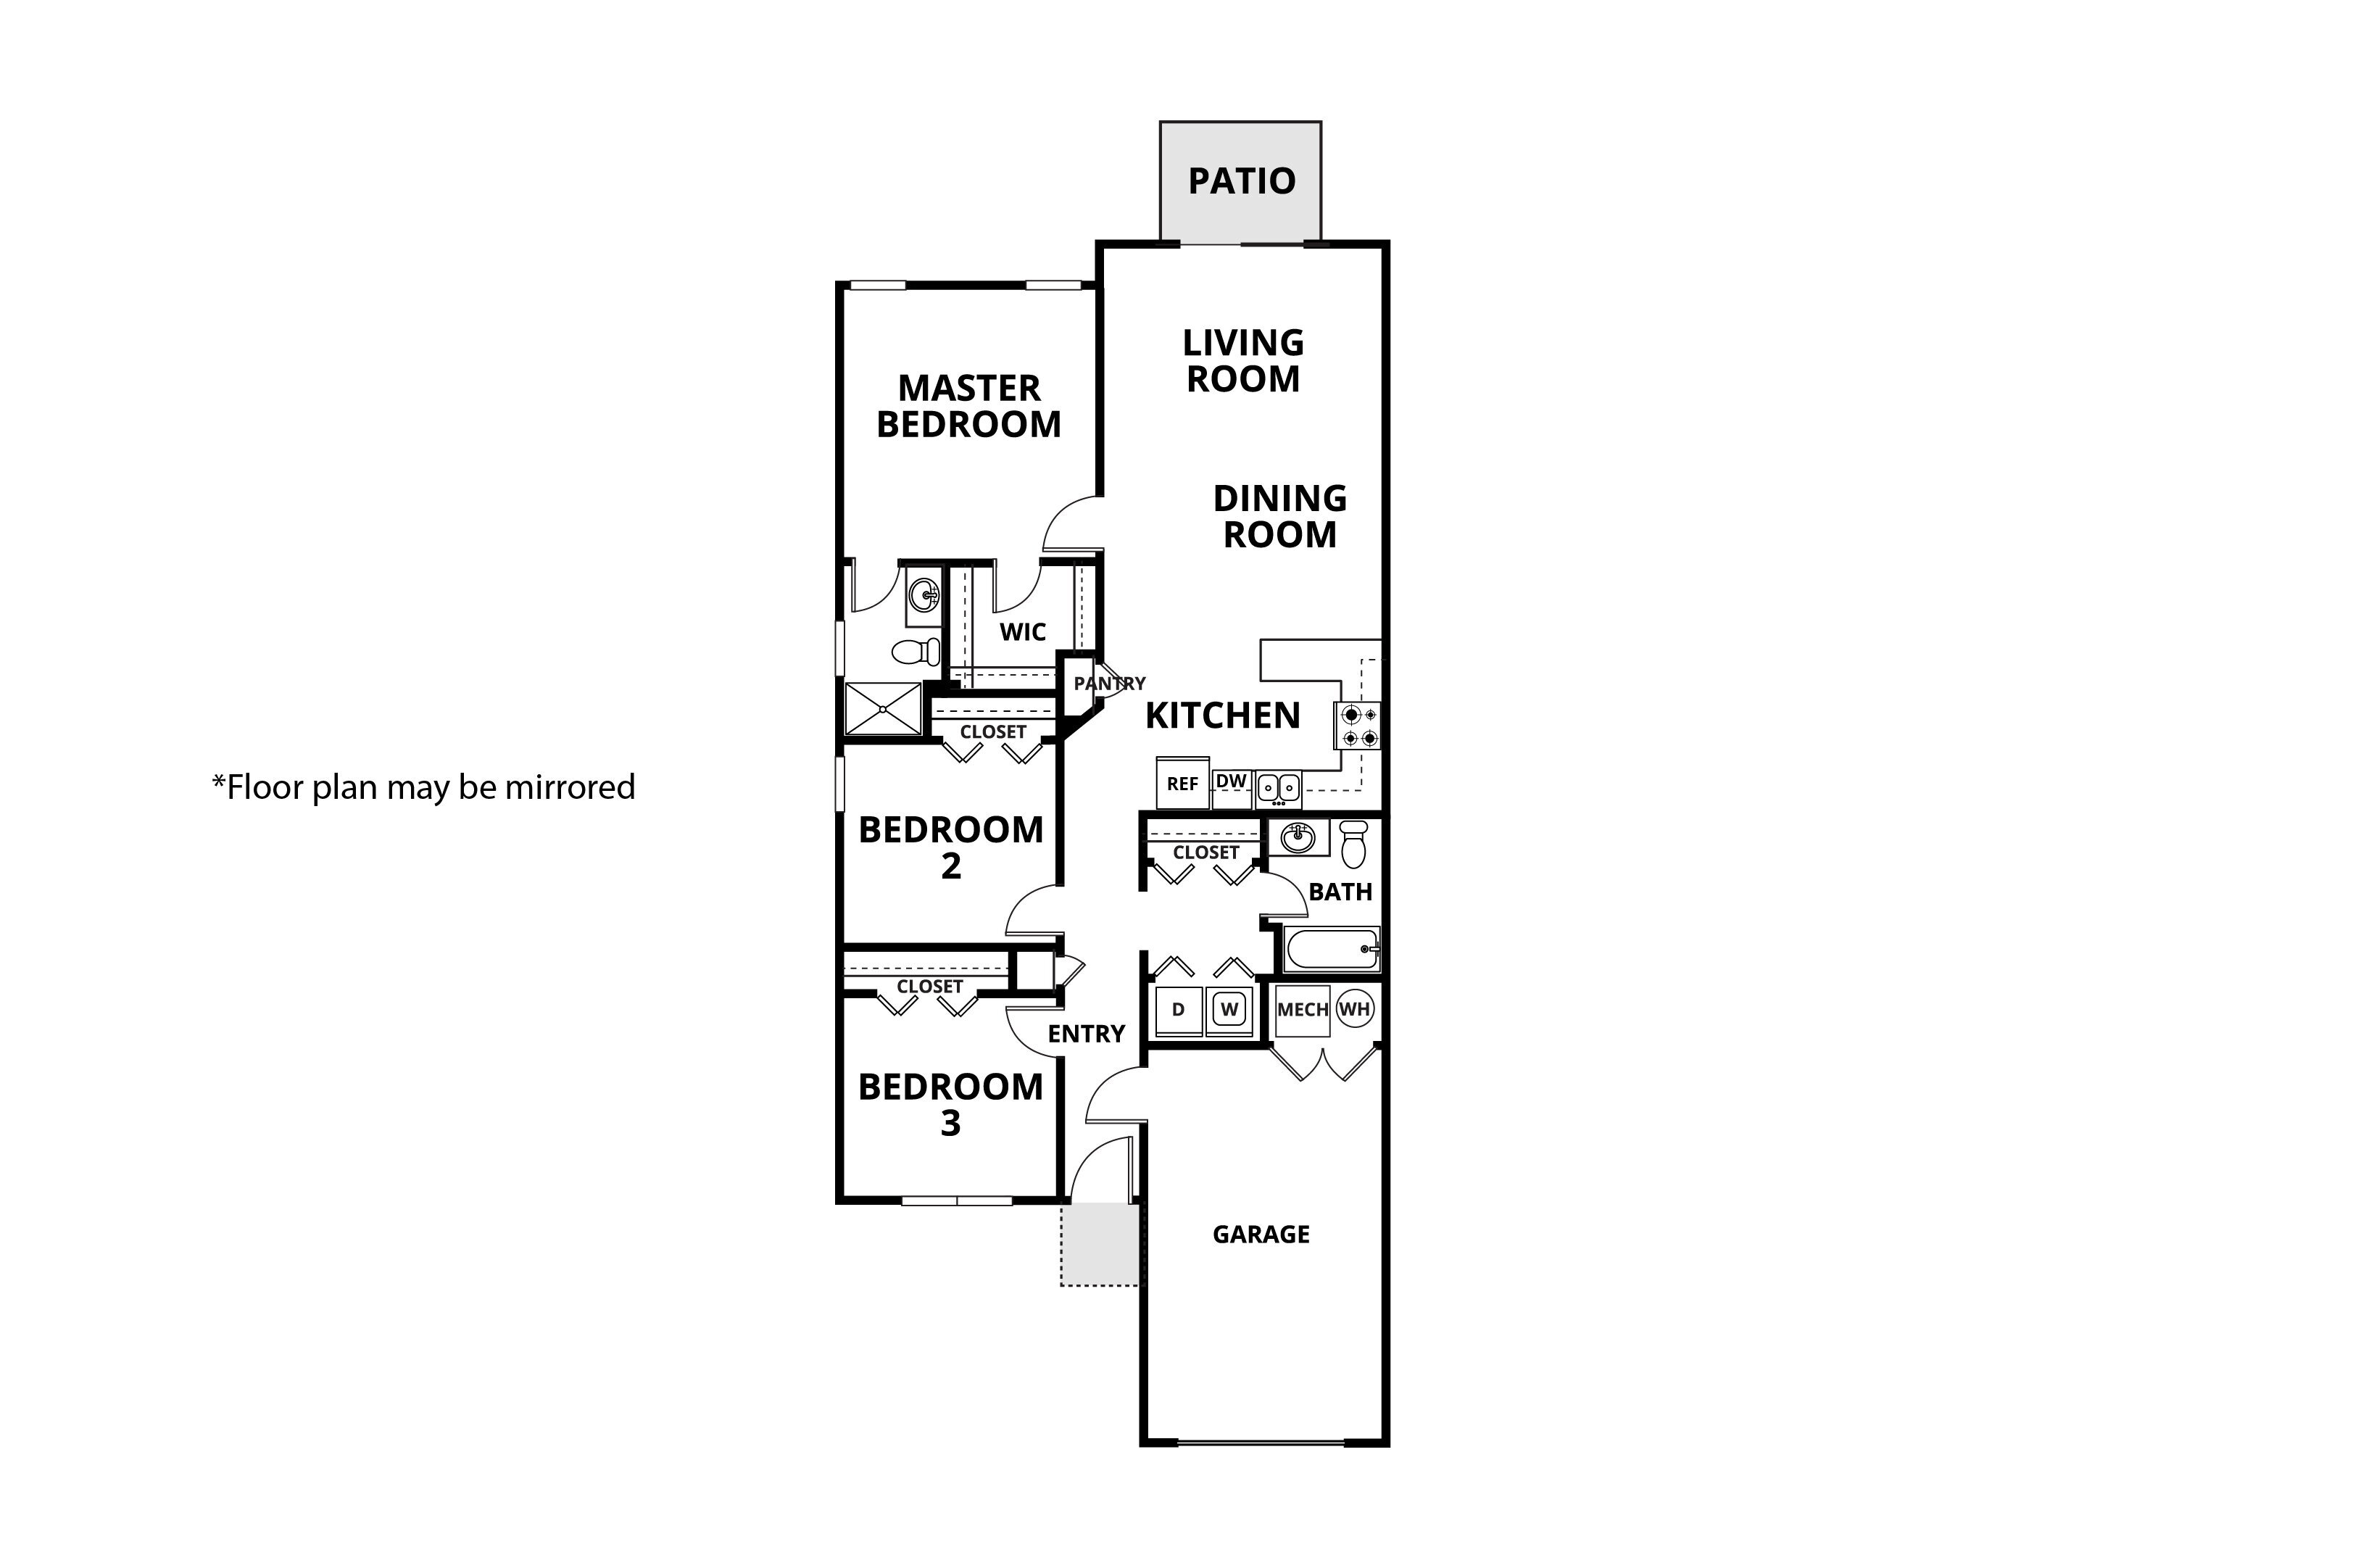 Floorplan: Name: C1-CC, Beds: 3, Baths: 2.0, Sqft: 1177